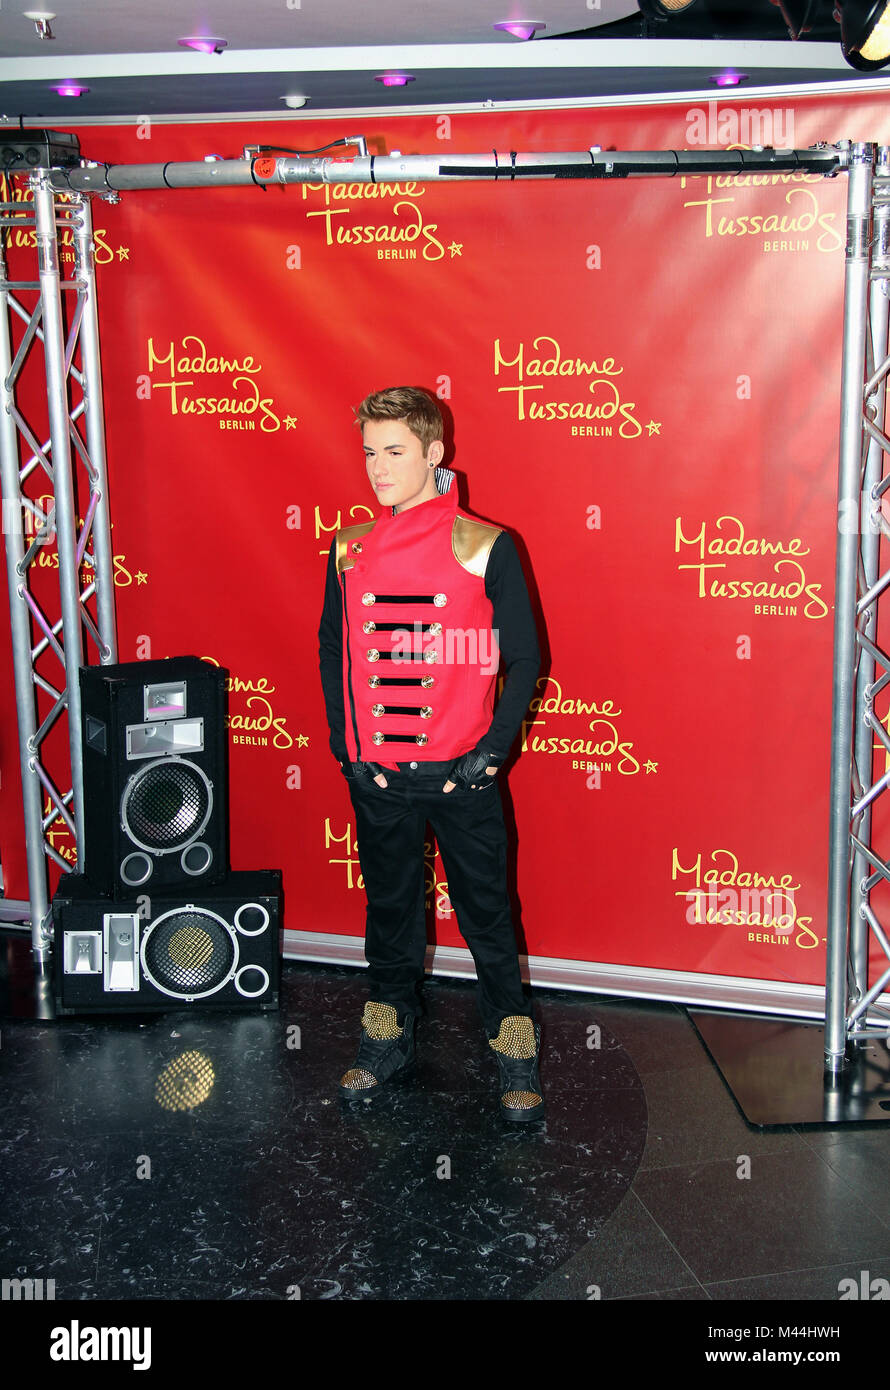 Madame Tussauds svela la Justin Bieber waxwork Foto Stock